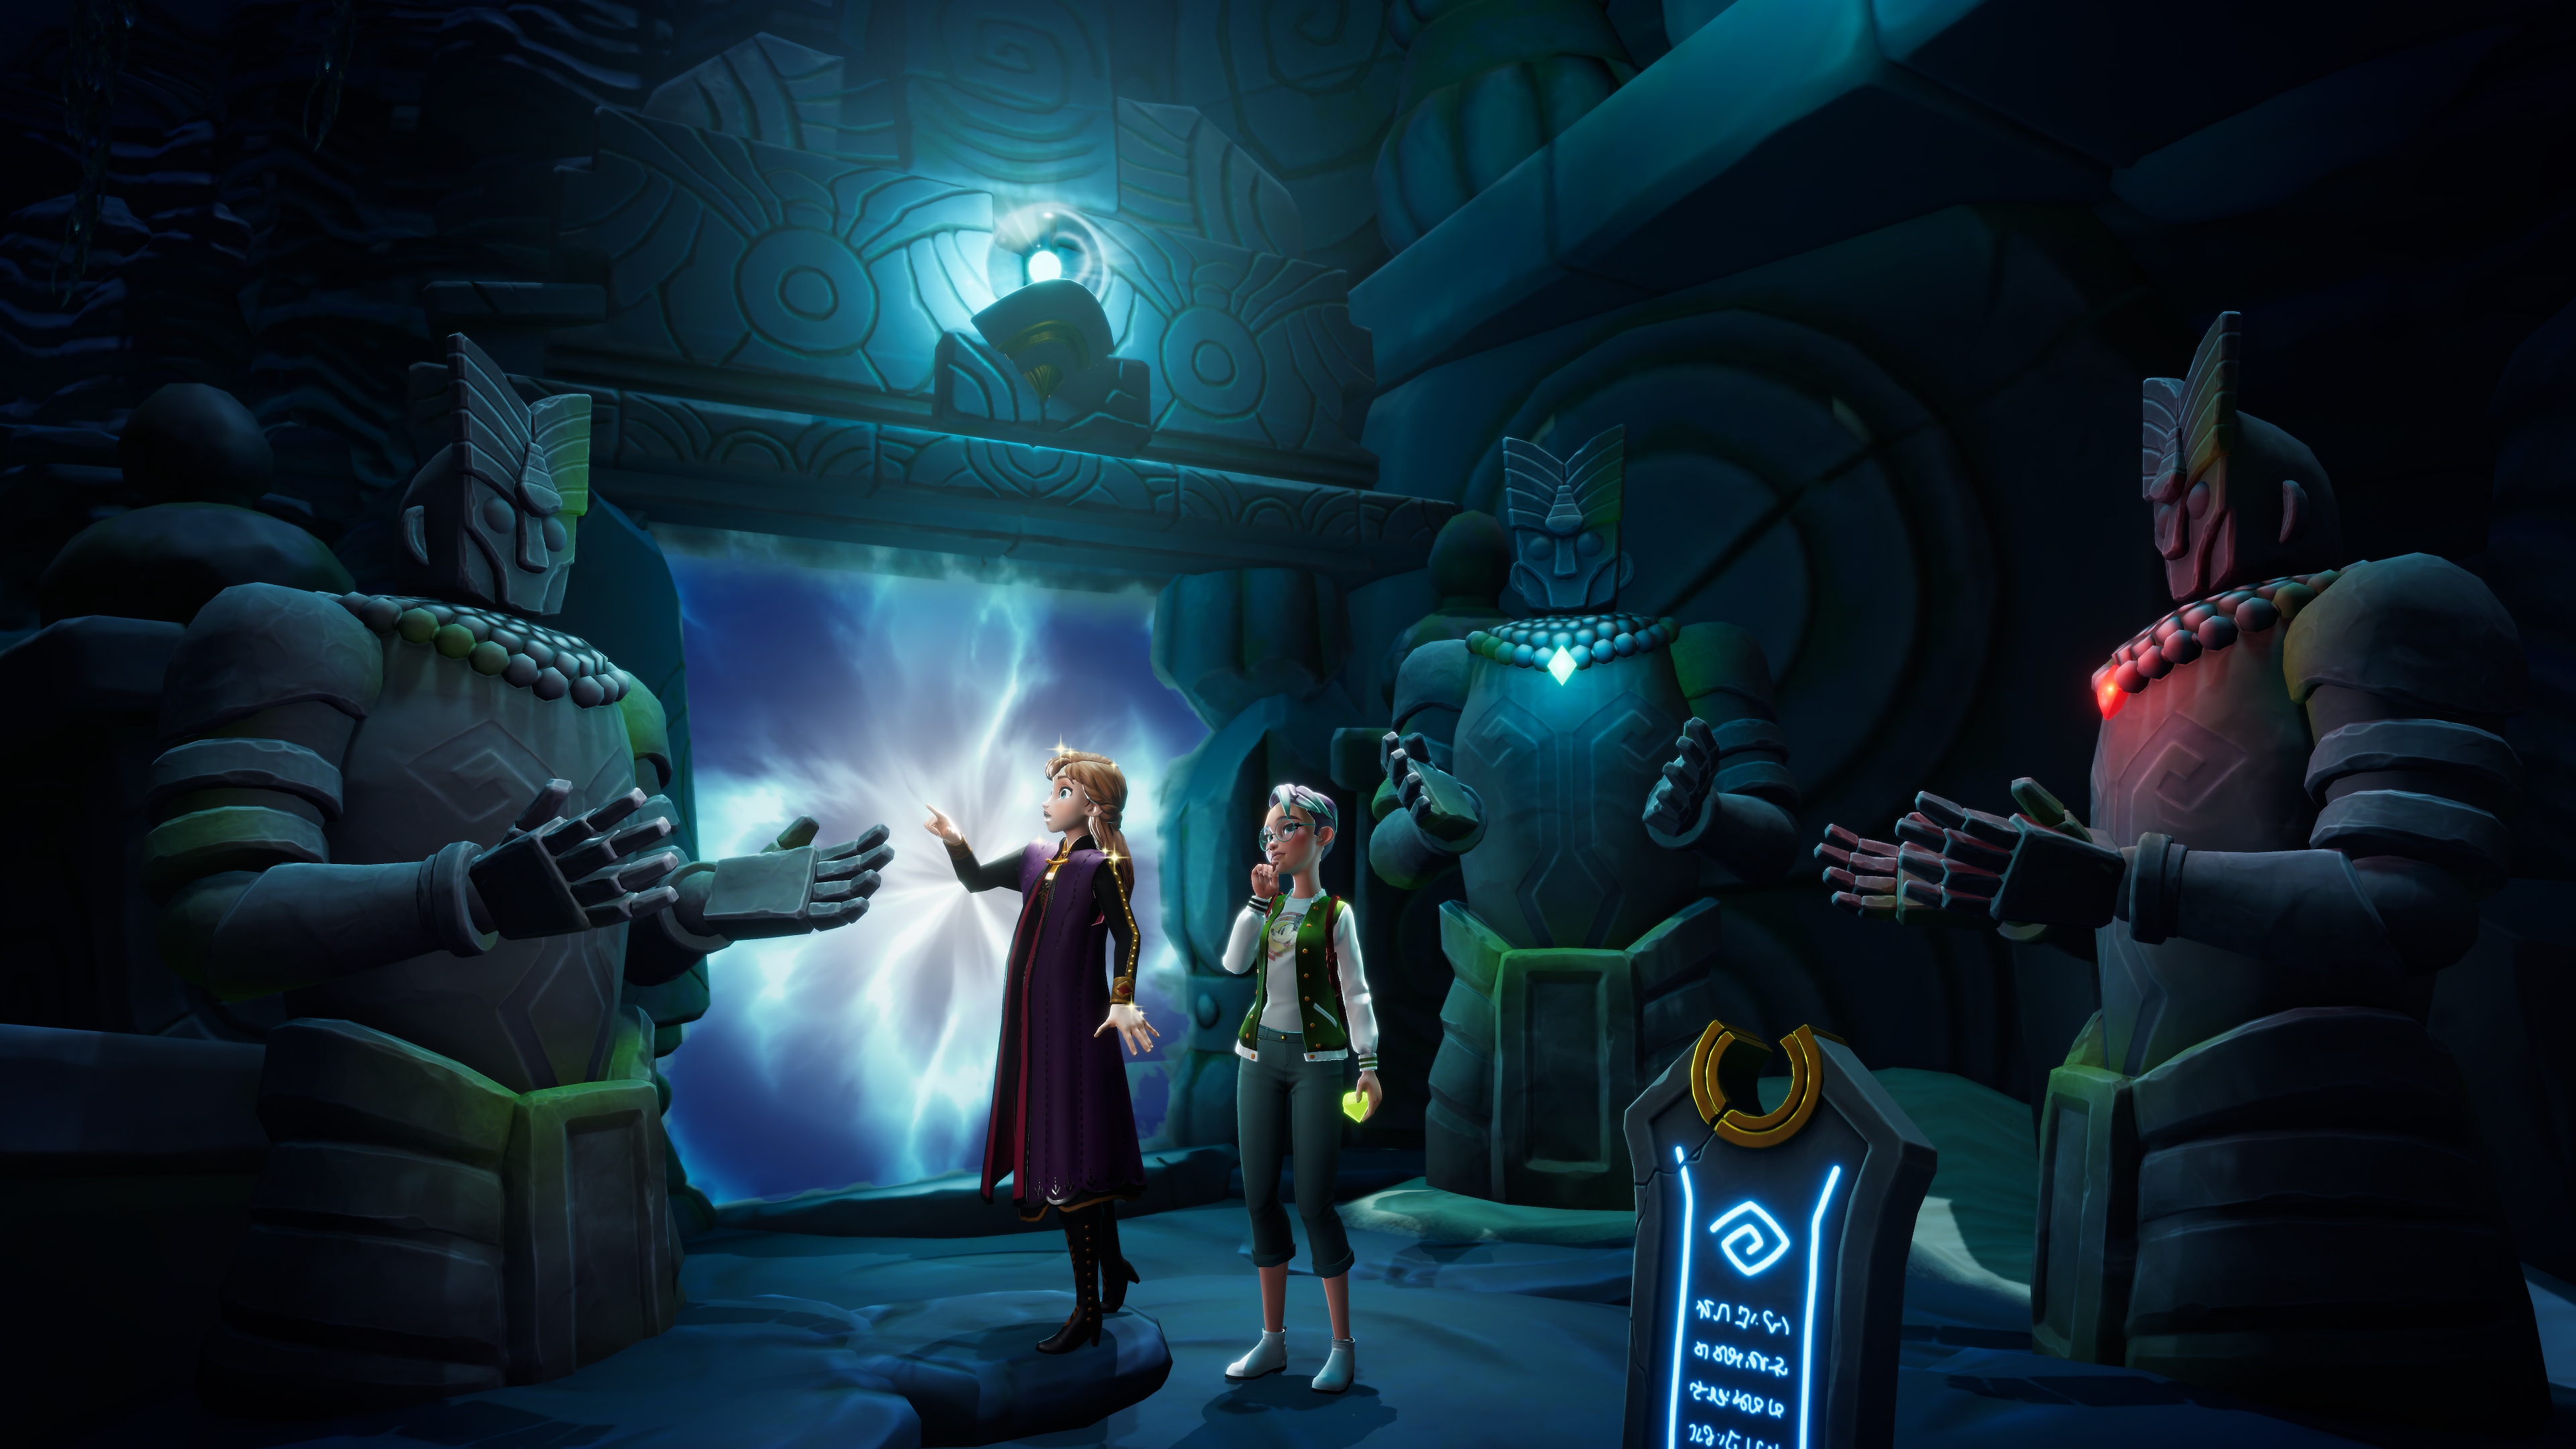 Captura de pantalla de Disney Dreamlight Valley mostrando a dos personajes rodeados de estatuas de piedra